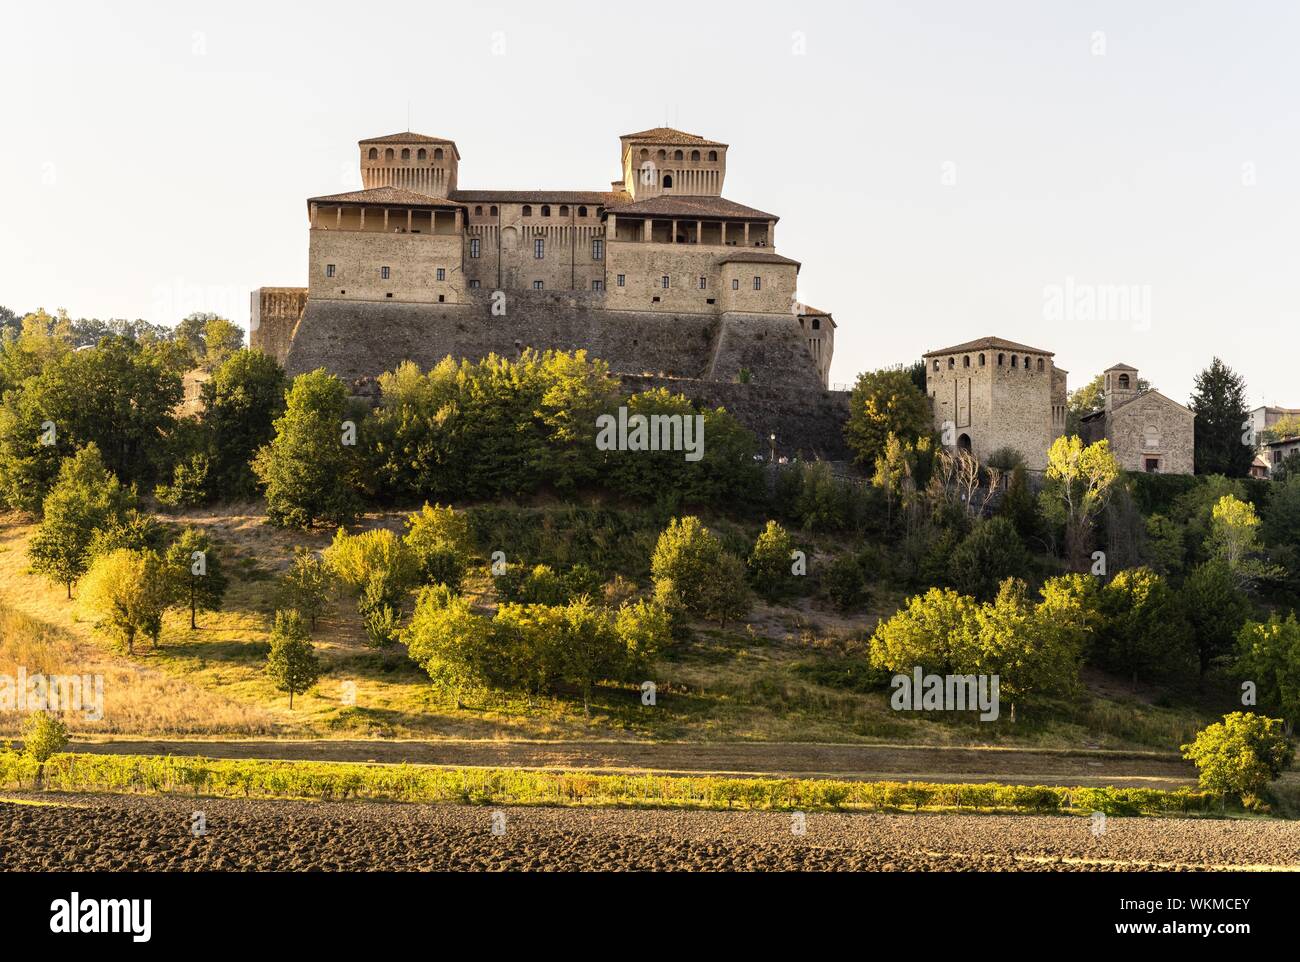 Castello di Torrechiara, Langhirano, Provinz von Parma, Emilia-Romagna, Italien Stockfoto